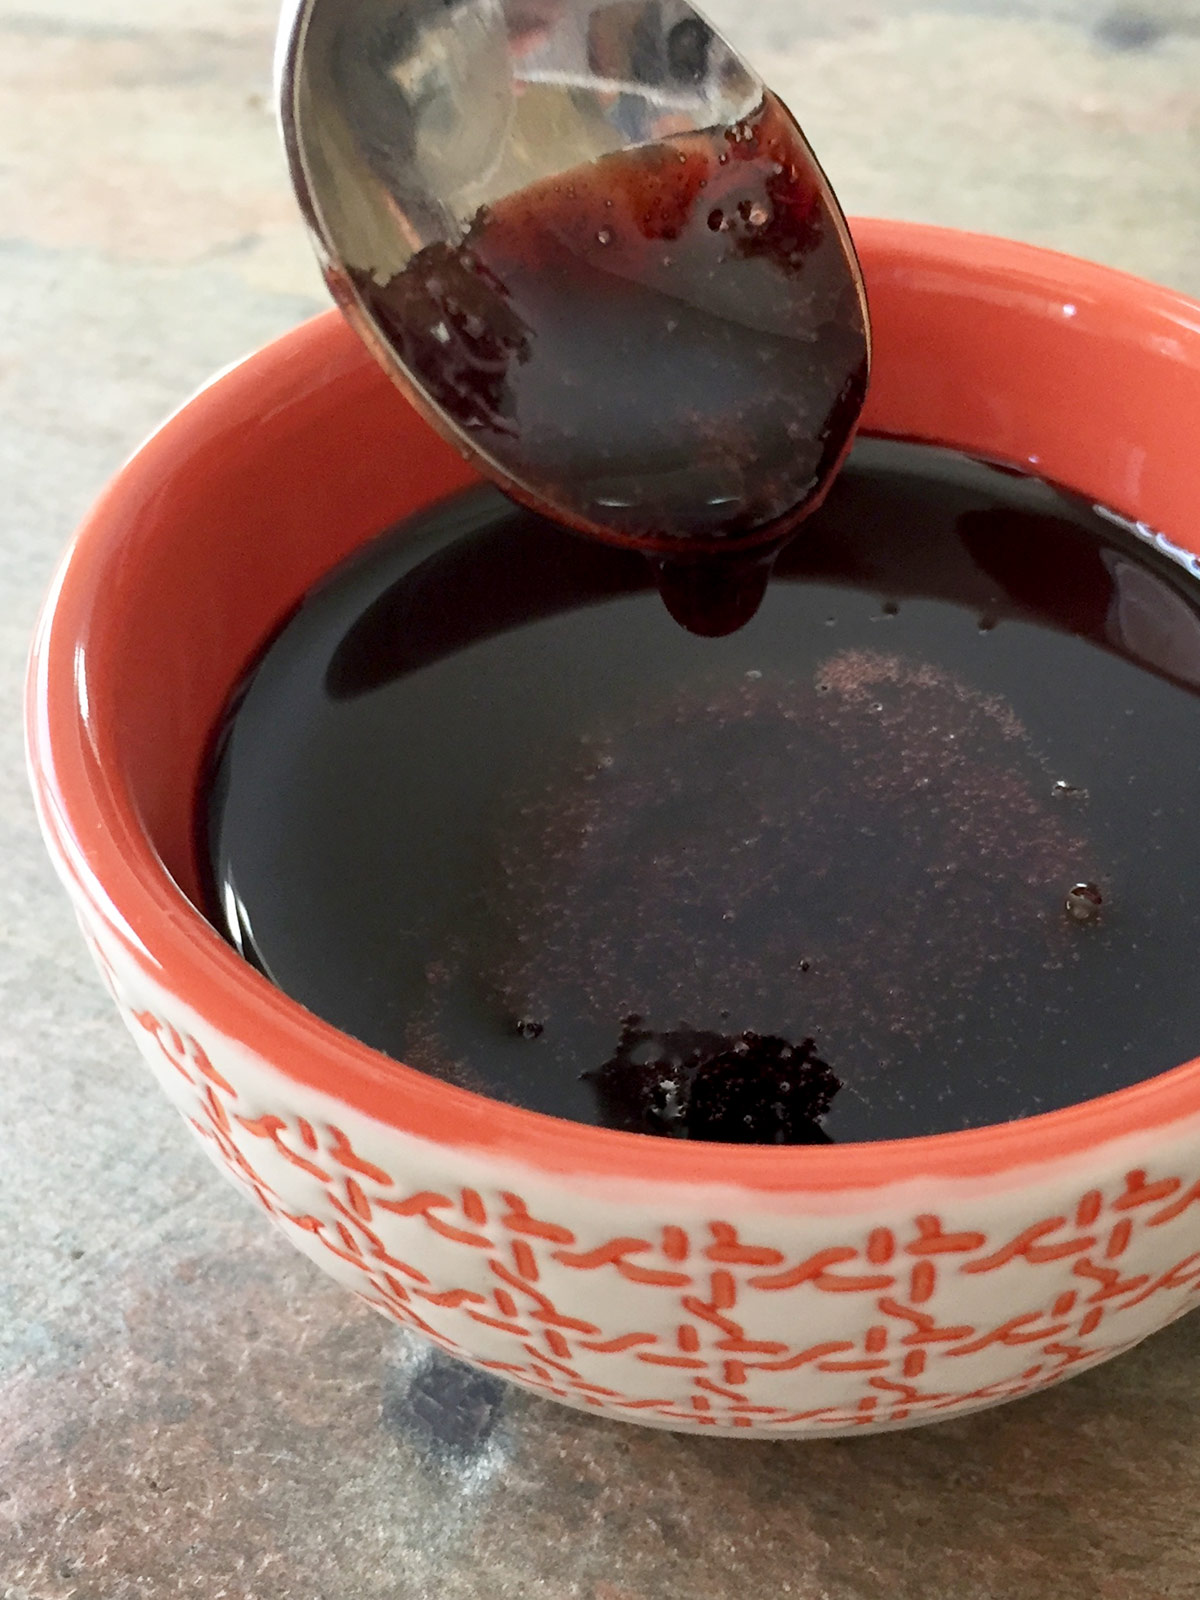 Pomegranate molasses dripping off spoon into orange bowl.